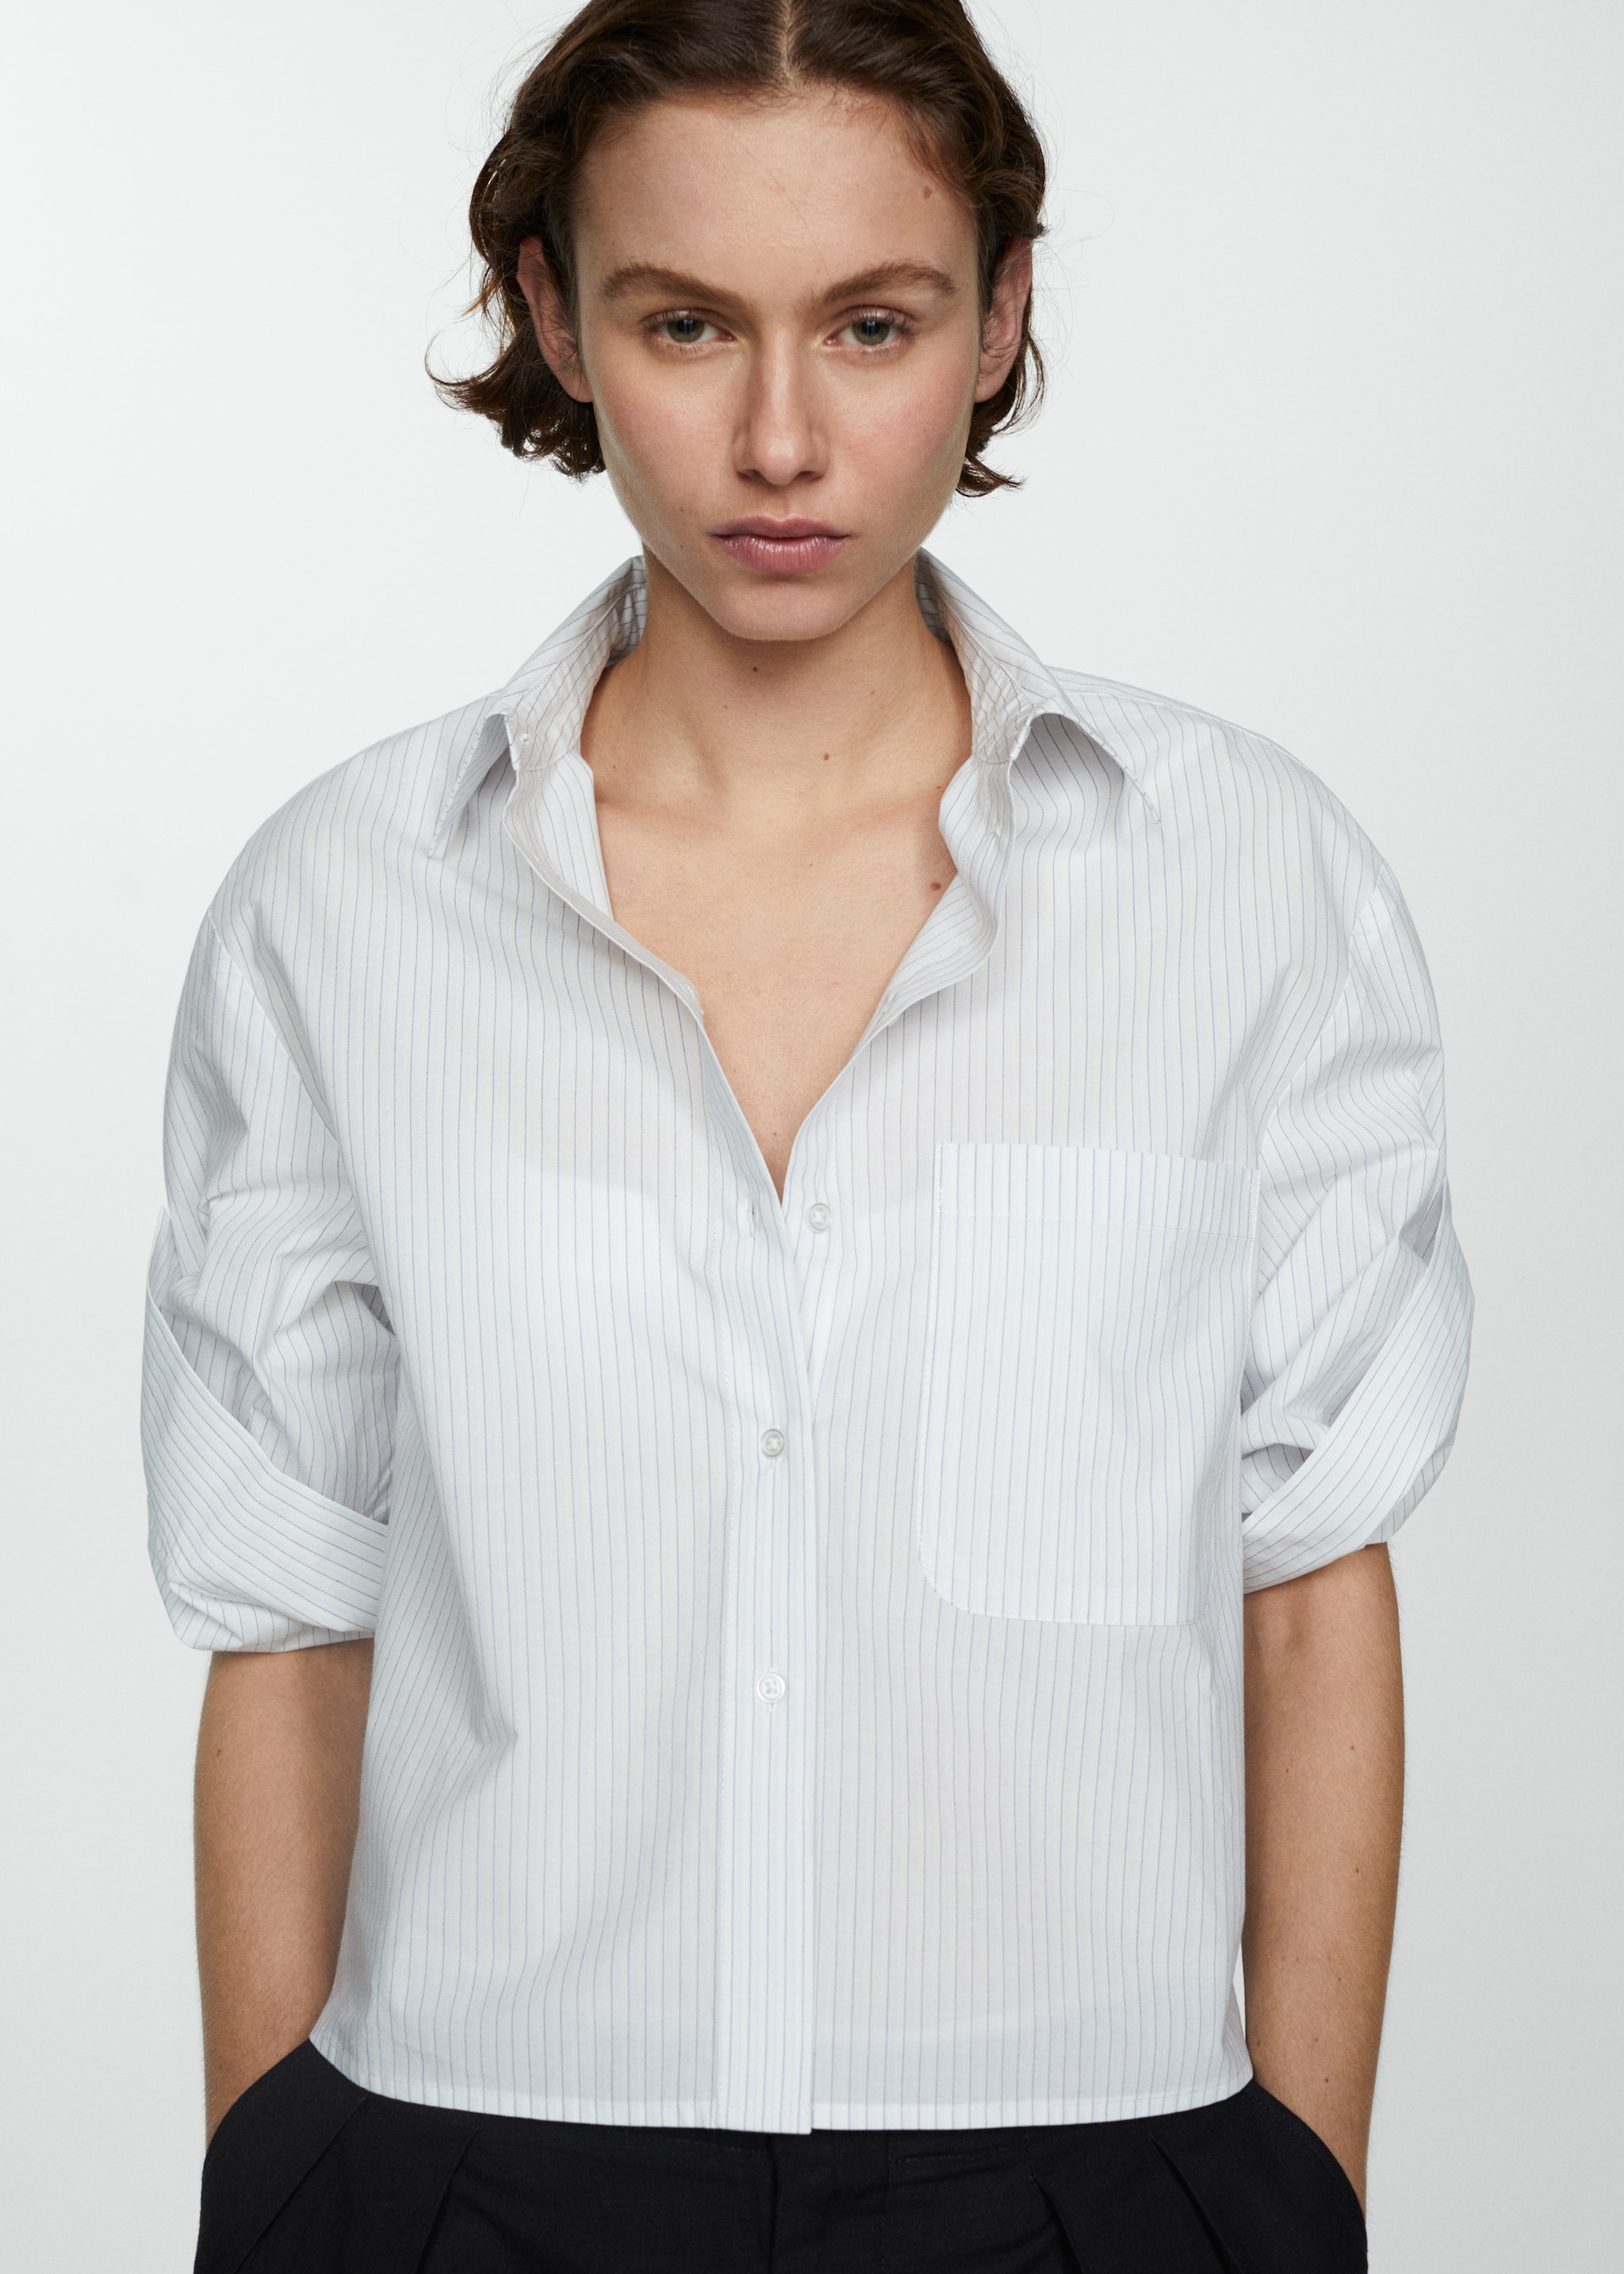 100% cotton striped shirt - Medium plane